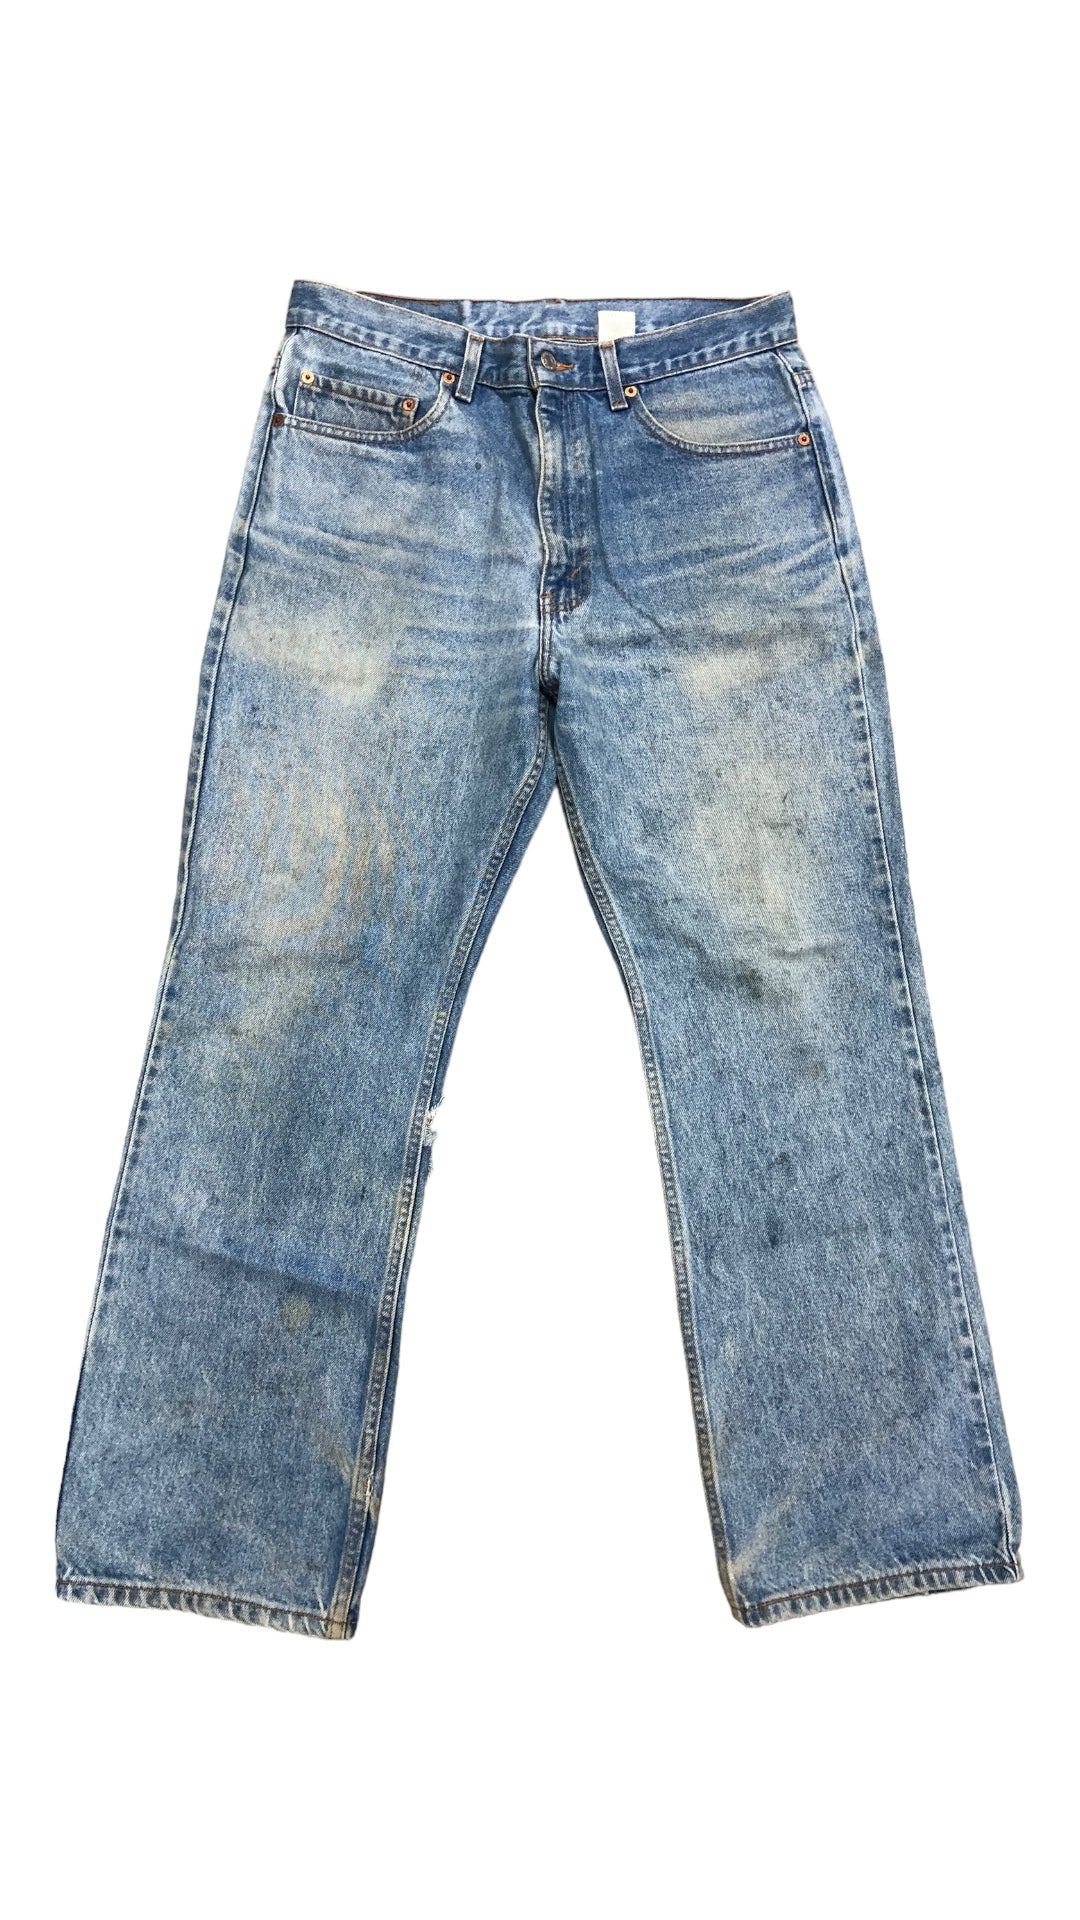 VTG Levi's 517 Boot Cut Denim Jeans Sz 34x30